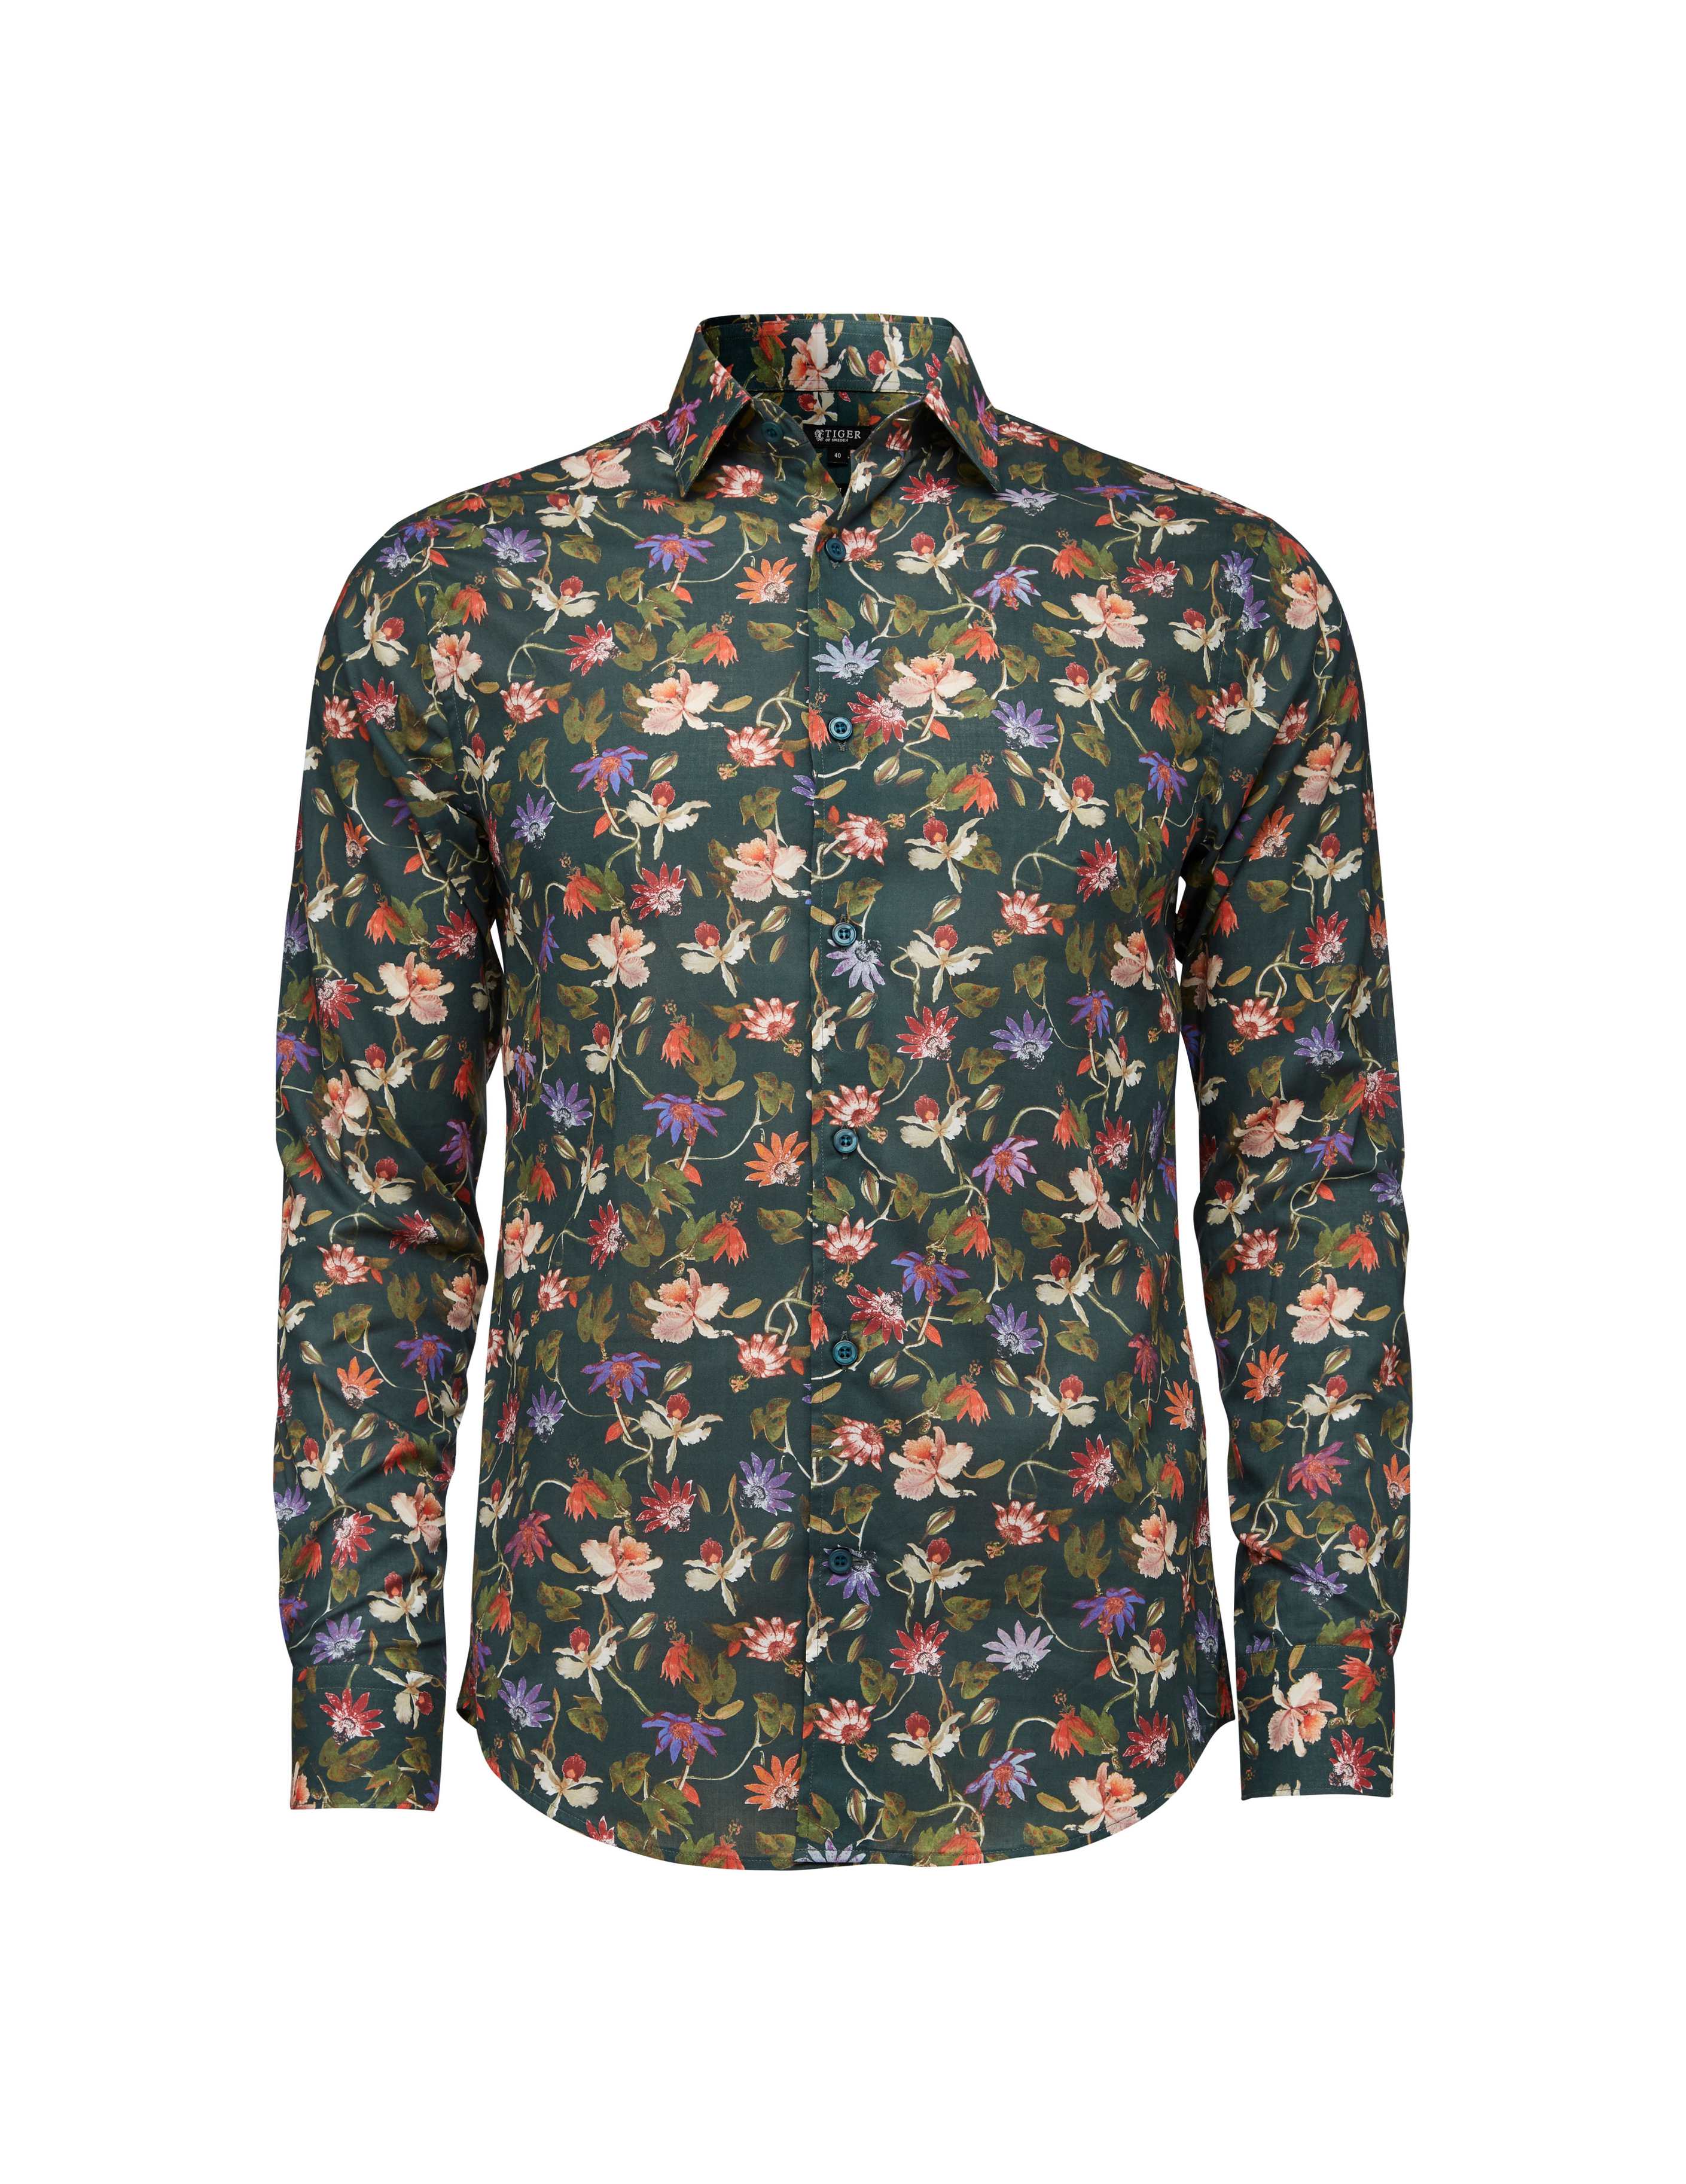 Farrell 4 shirt - Köp All Clothing online